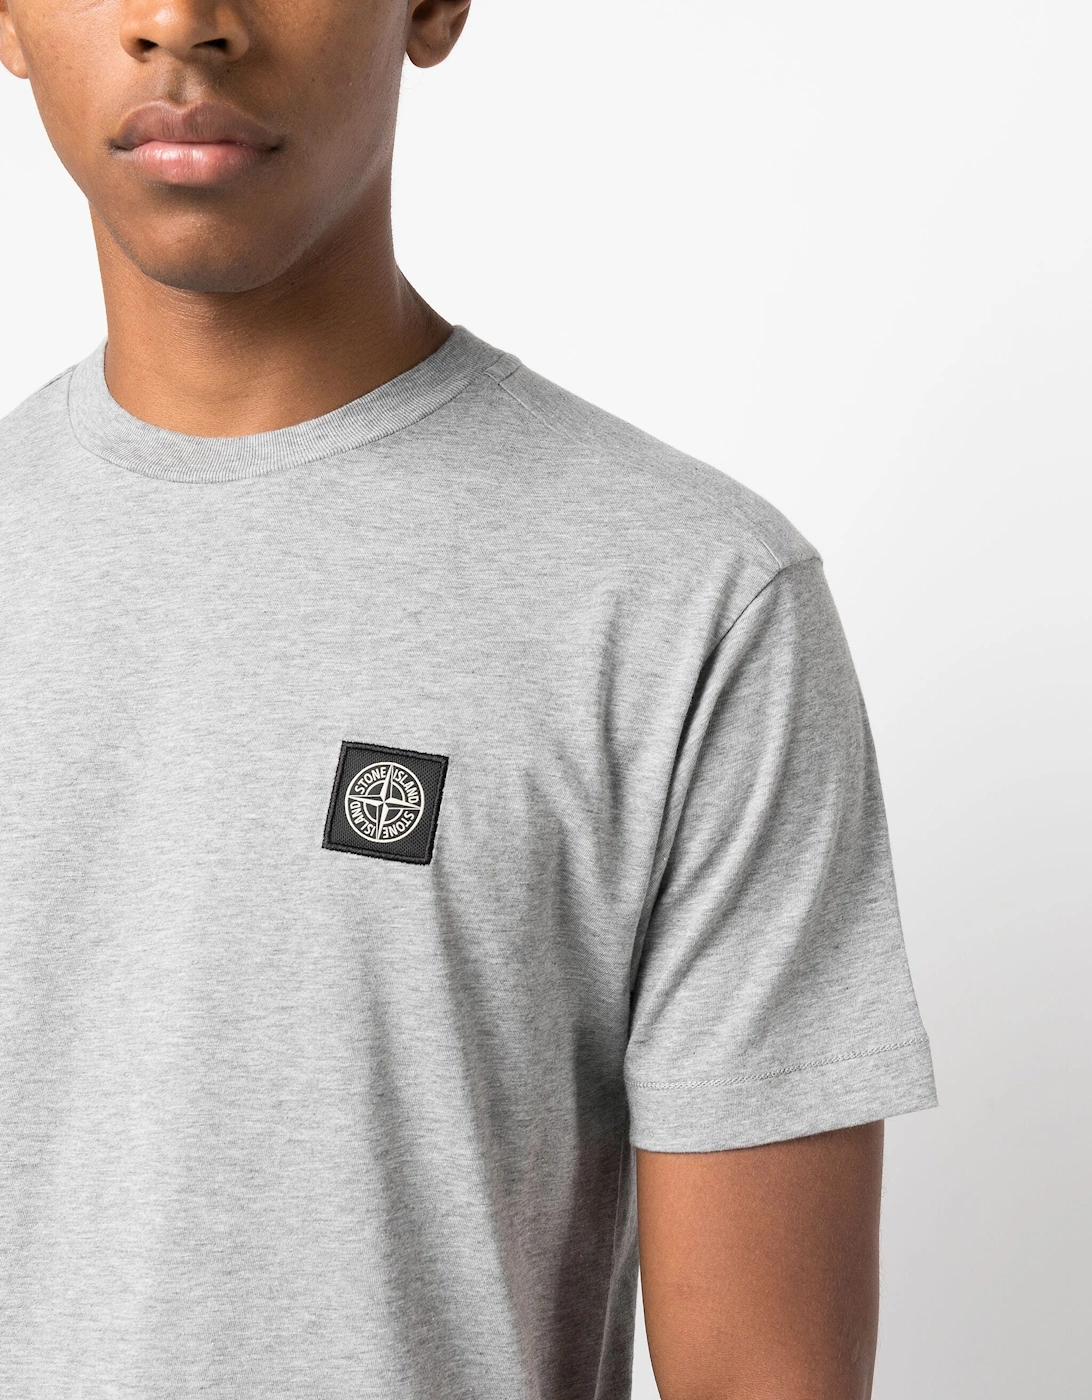 Compass Appliqué Cotton T-Shirt in Grey